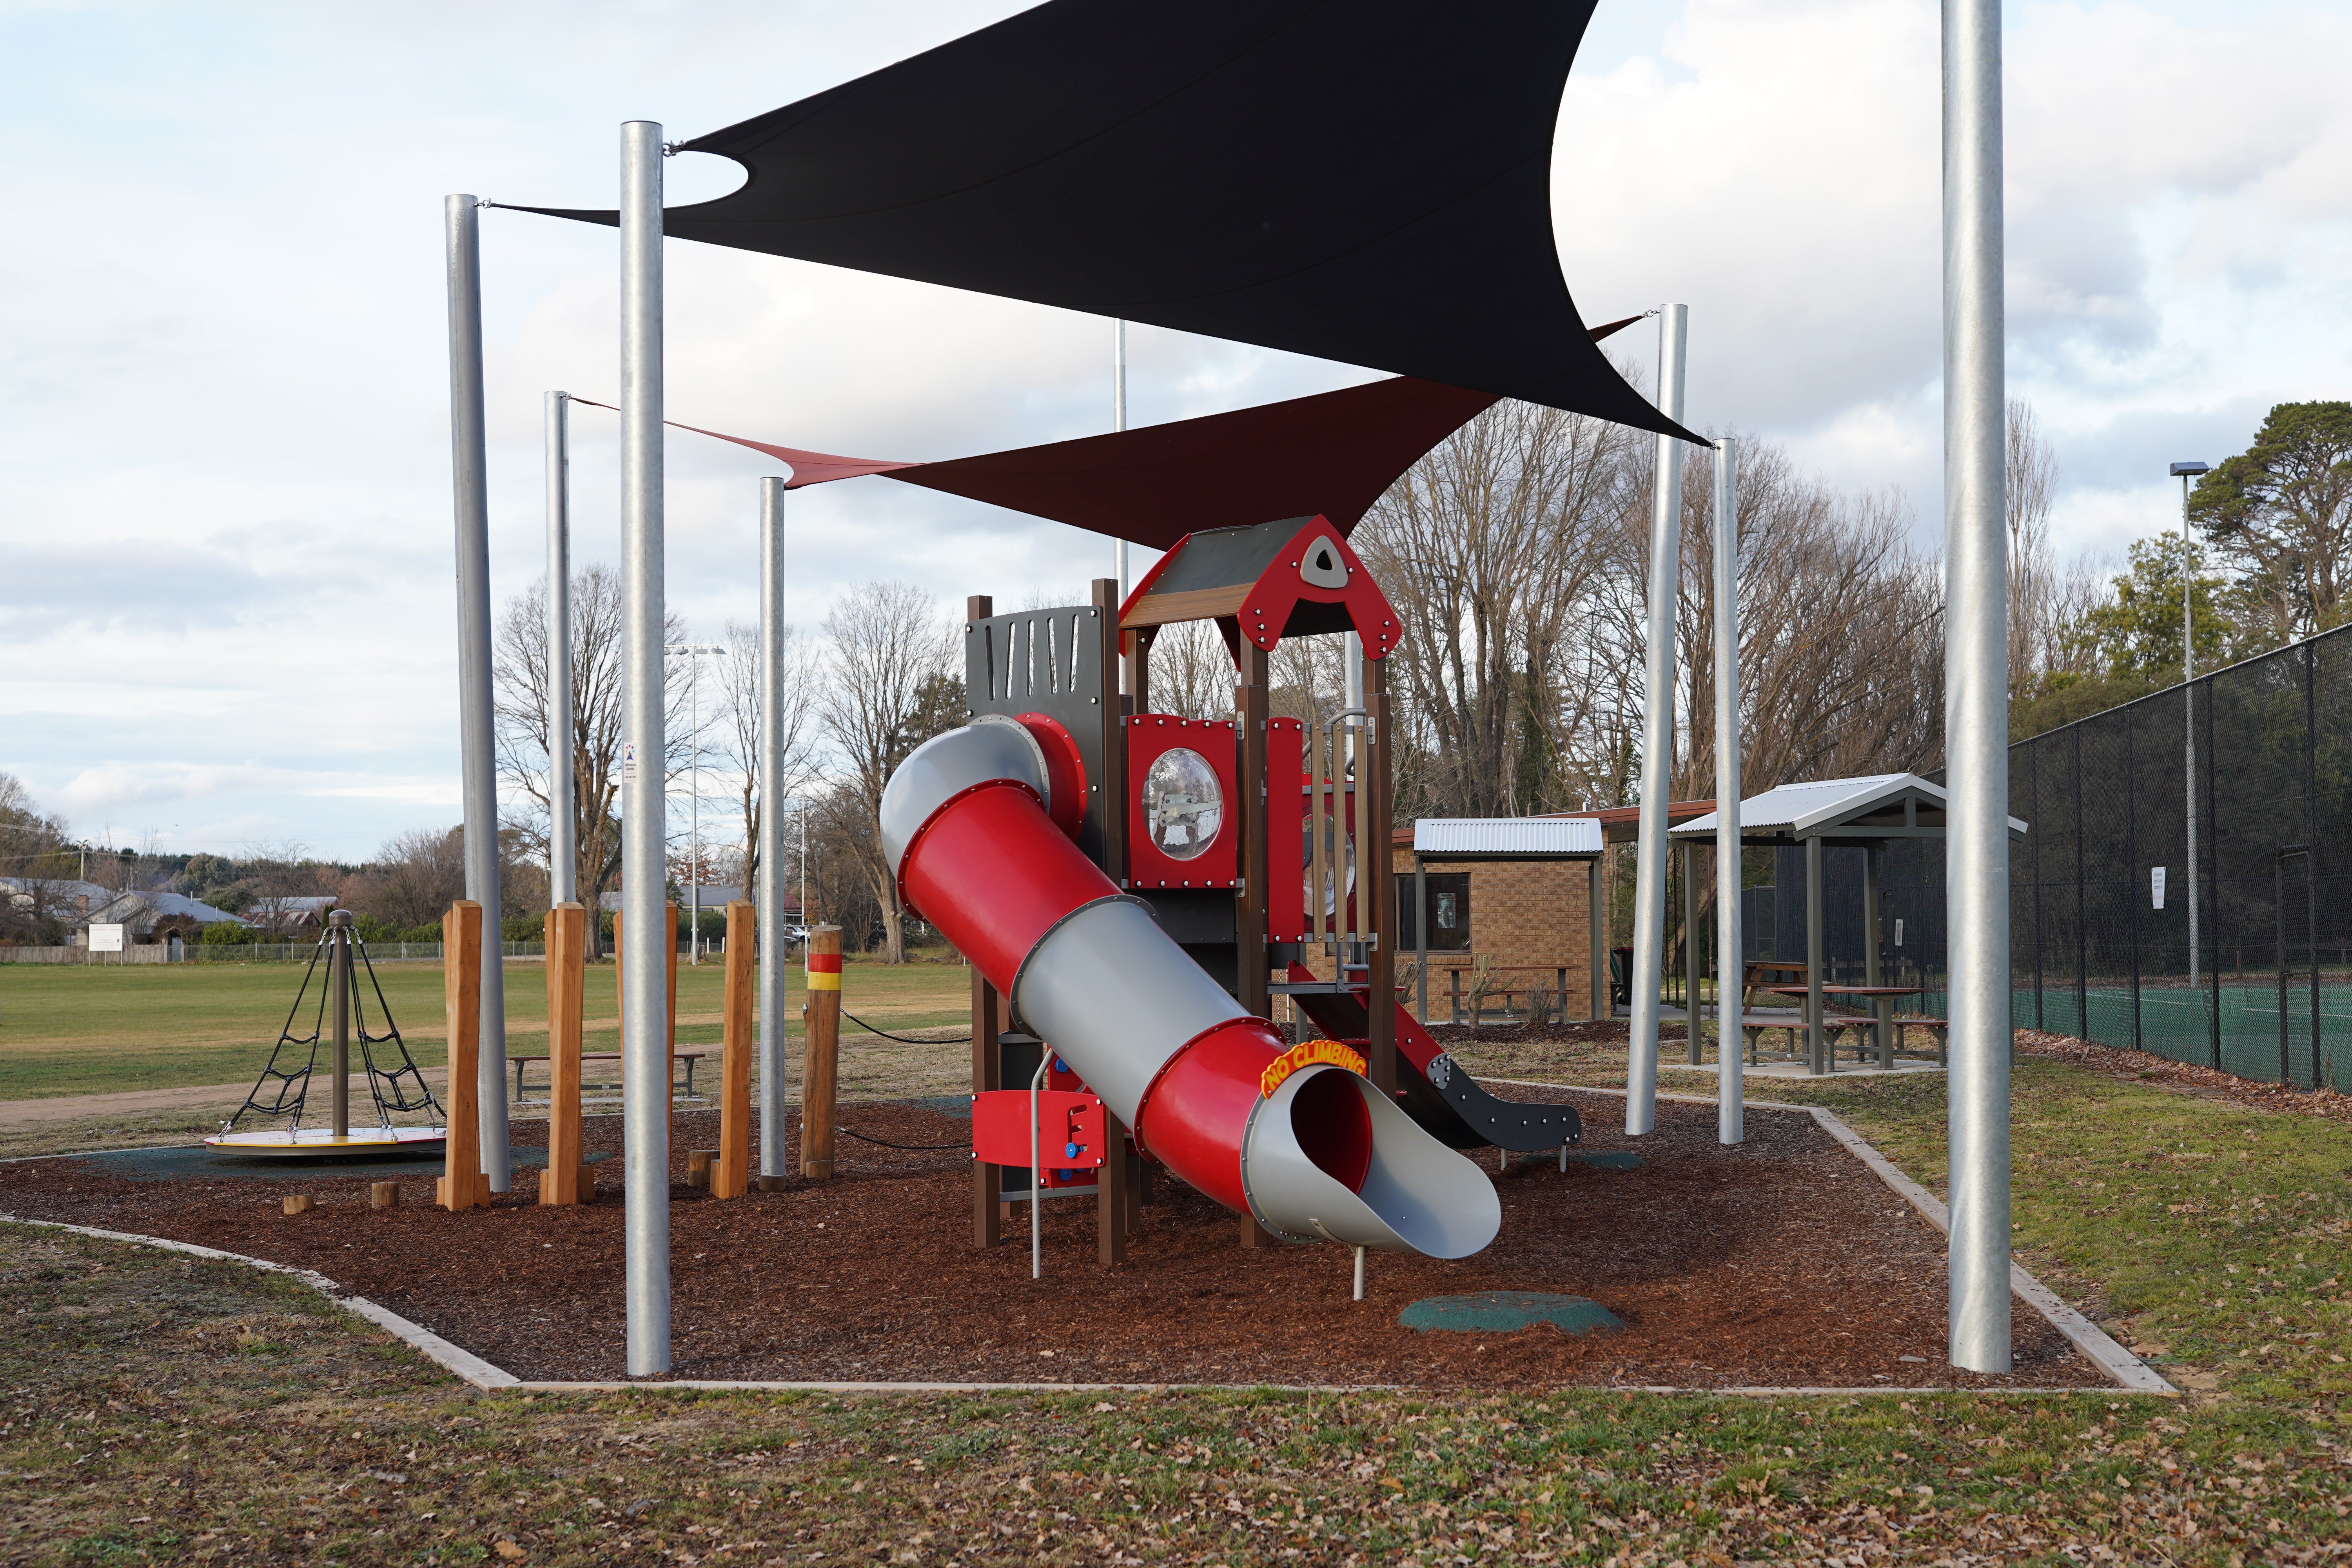 Braidwood Recreation Grounds and Playground - Accommodation Gladstone